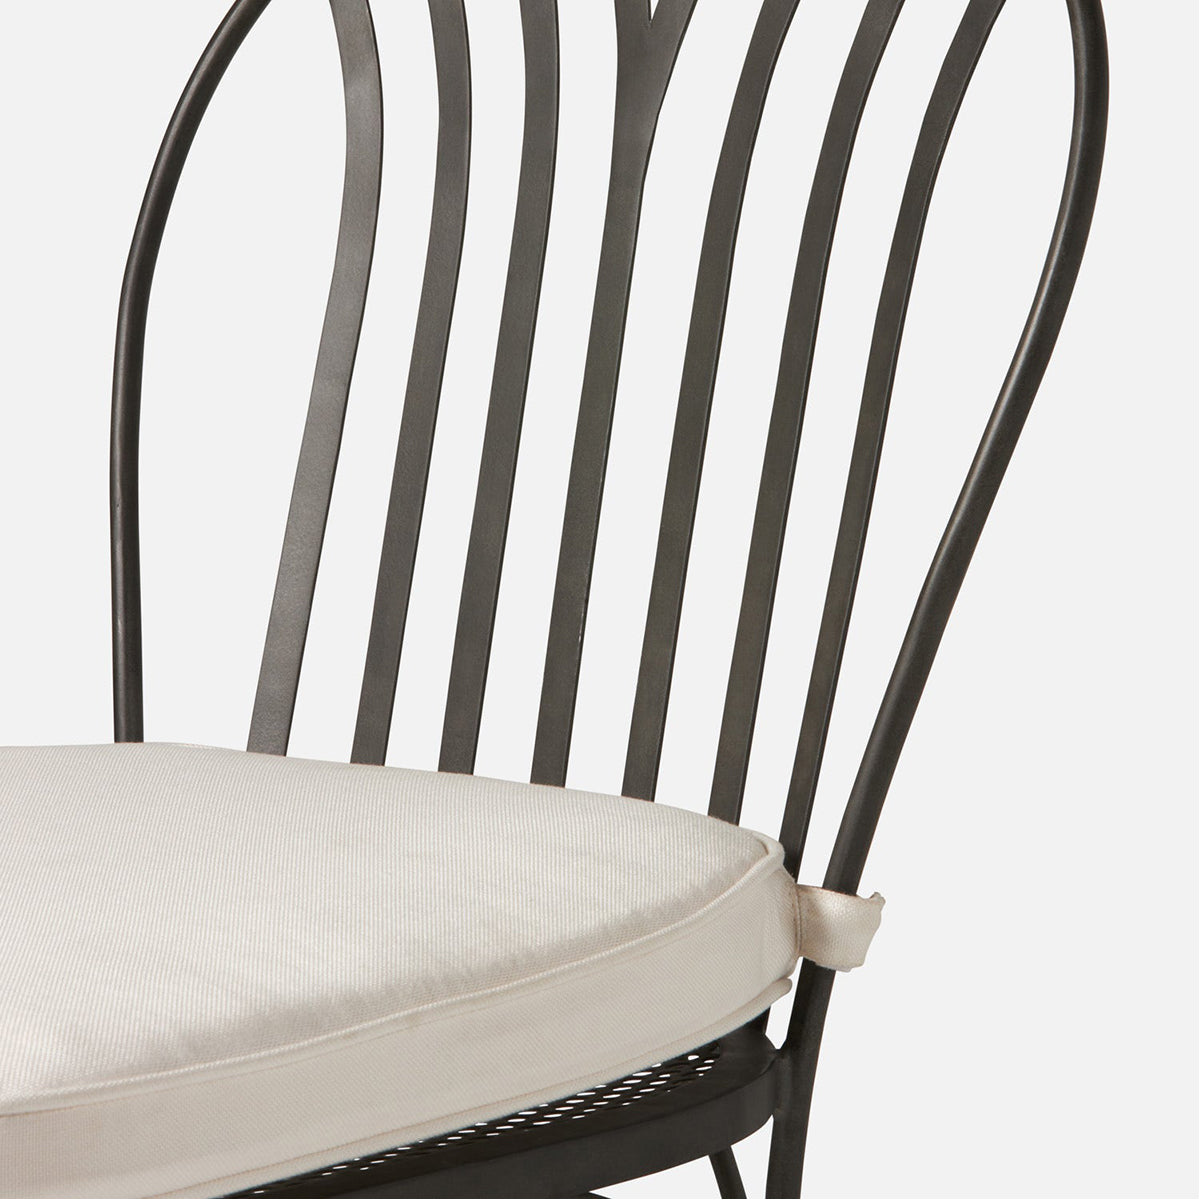 Made Goods Shayne Outdoor Dining Chair with Alsek Fabric Cushion